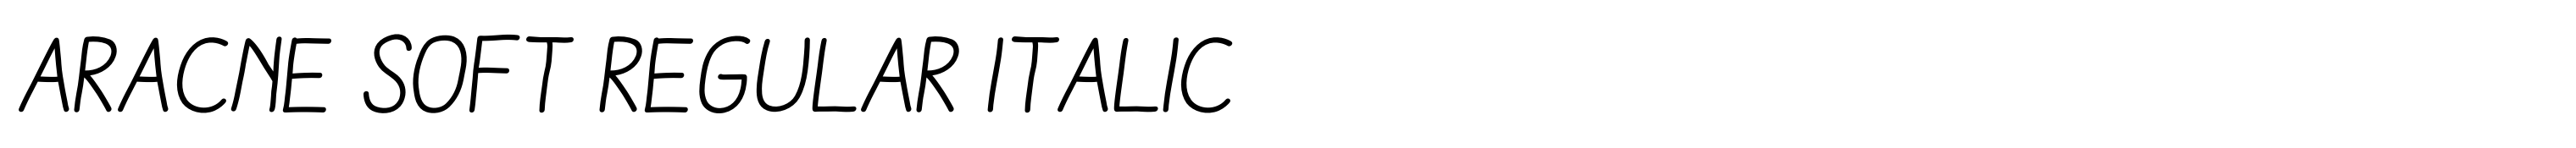 Aracne Soft Regular Italic